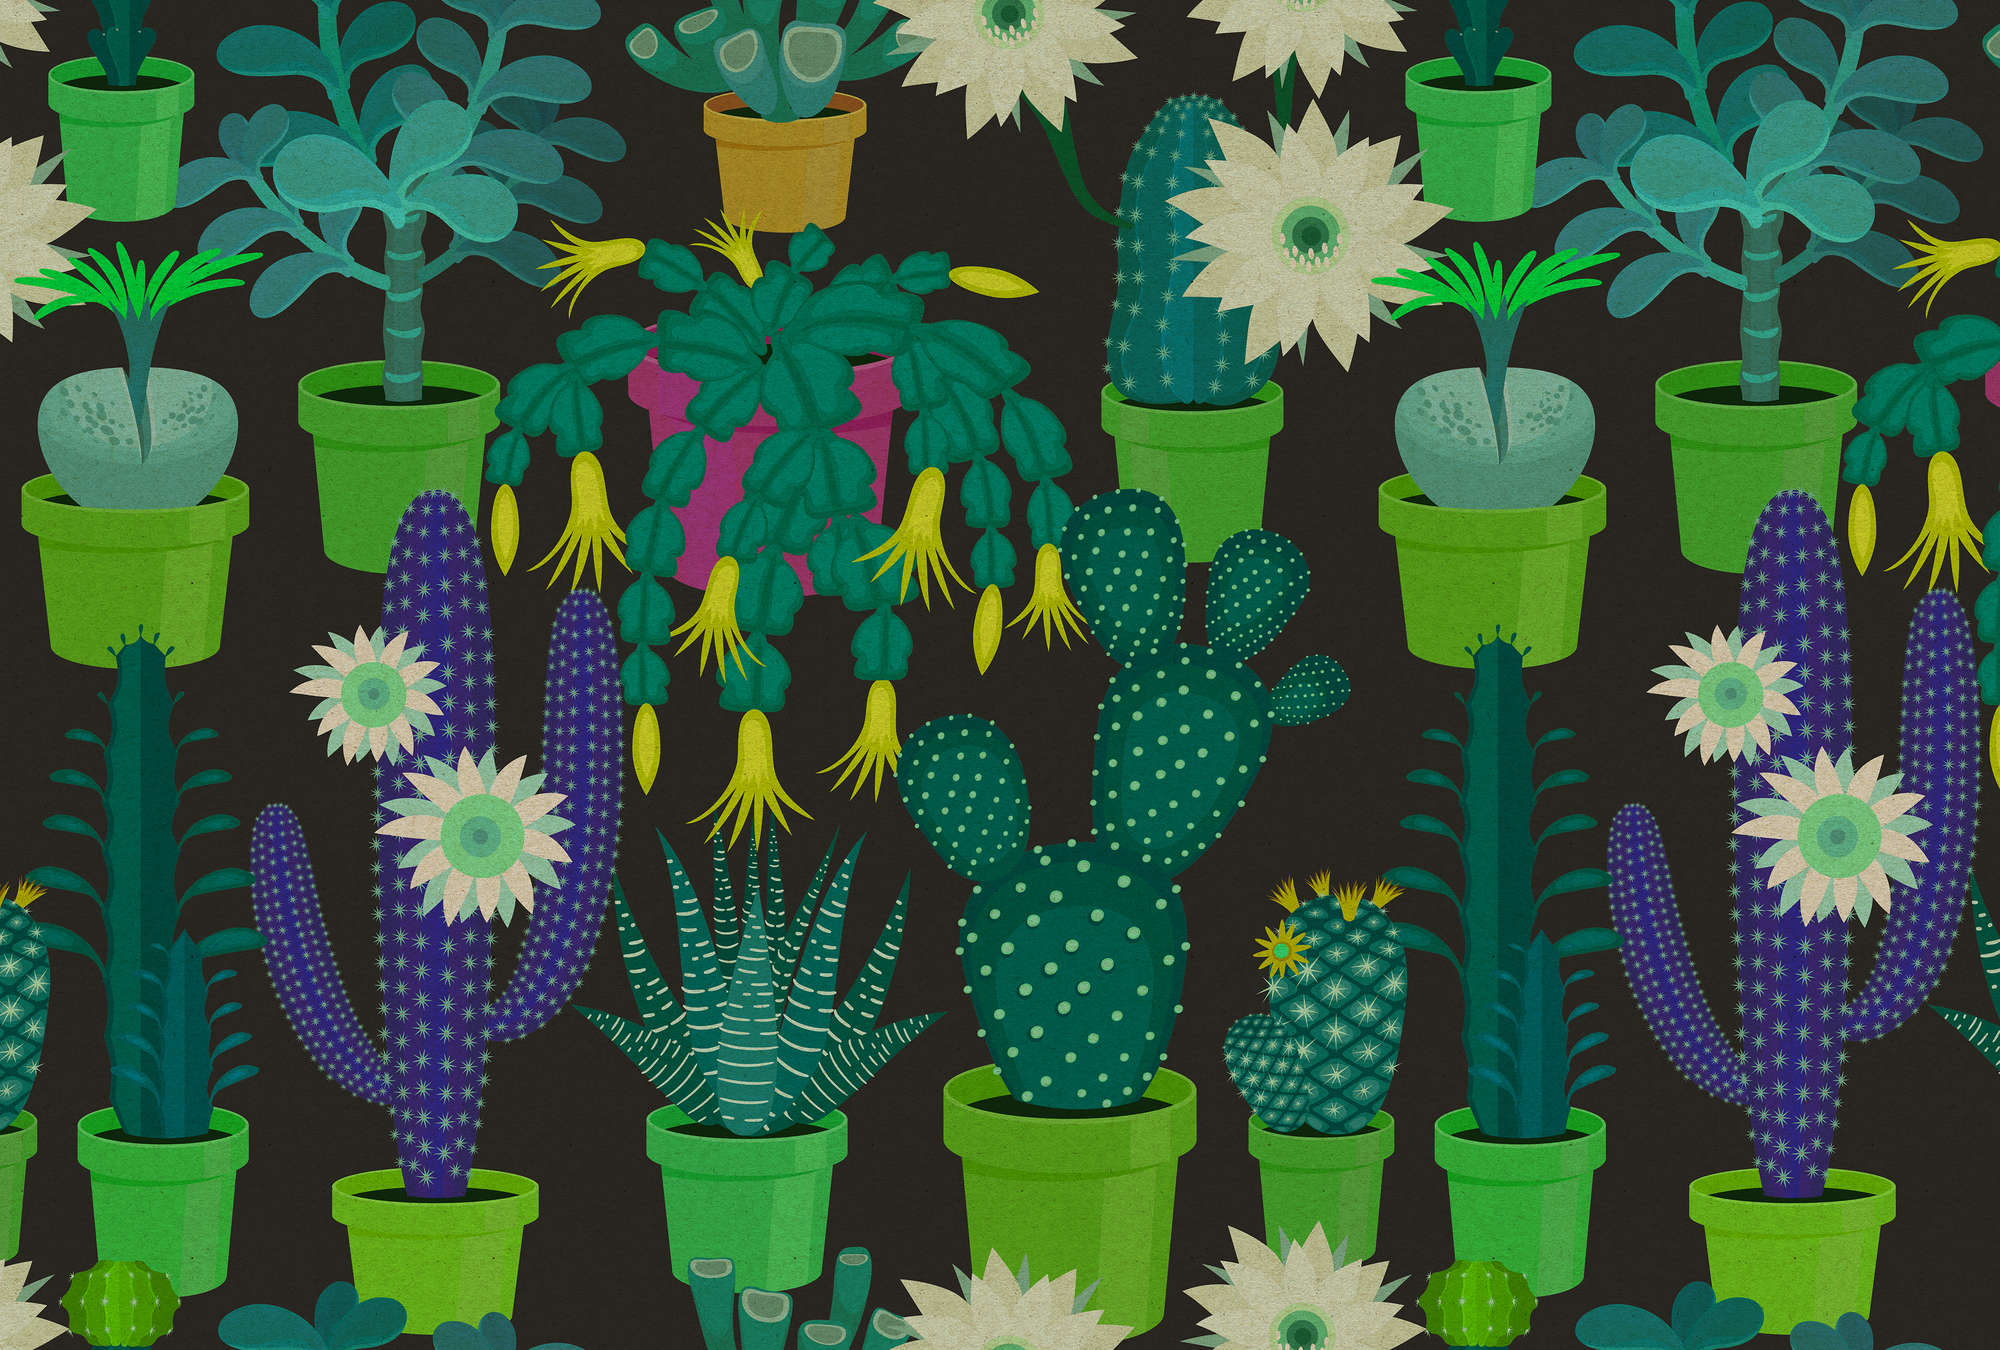             Jardín de cactus 2 - Mural de pared con cactus de colores en estilo cómic en estructura de cartón - Verde, Negro | Vellón liso mate
        